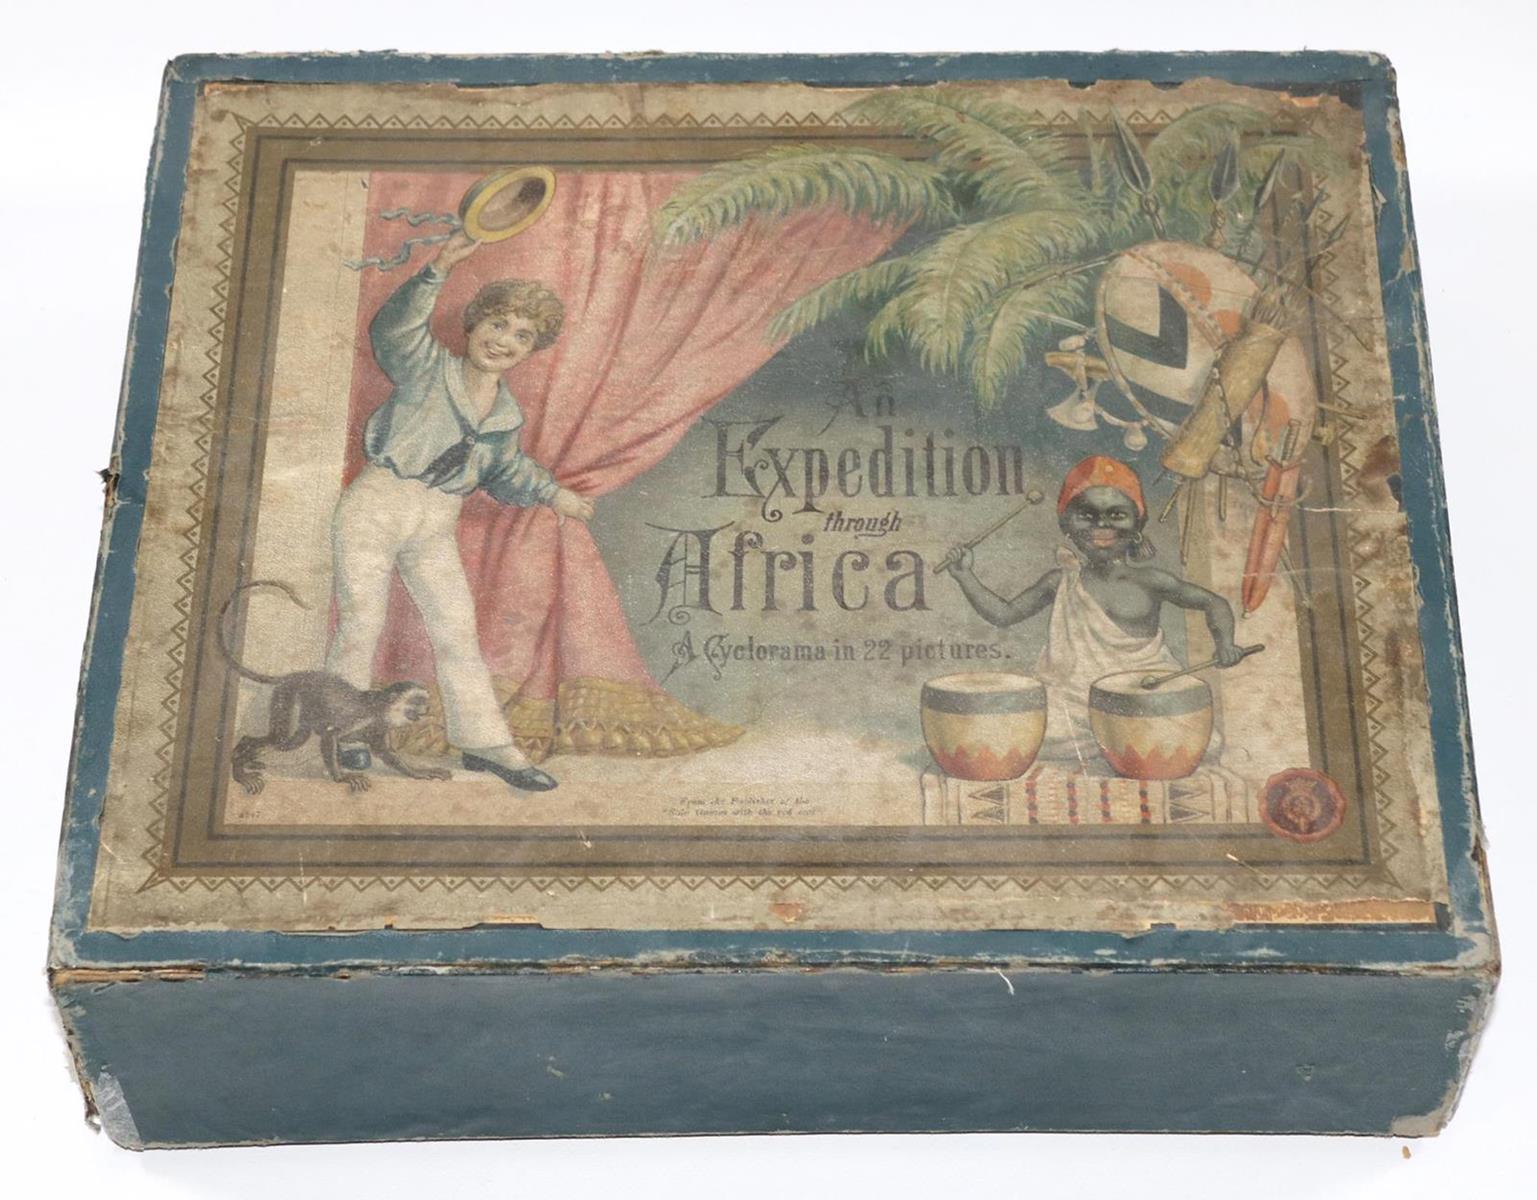 Expedition through Africa, An. | Bild Nr.2